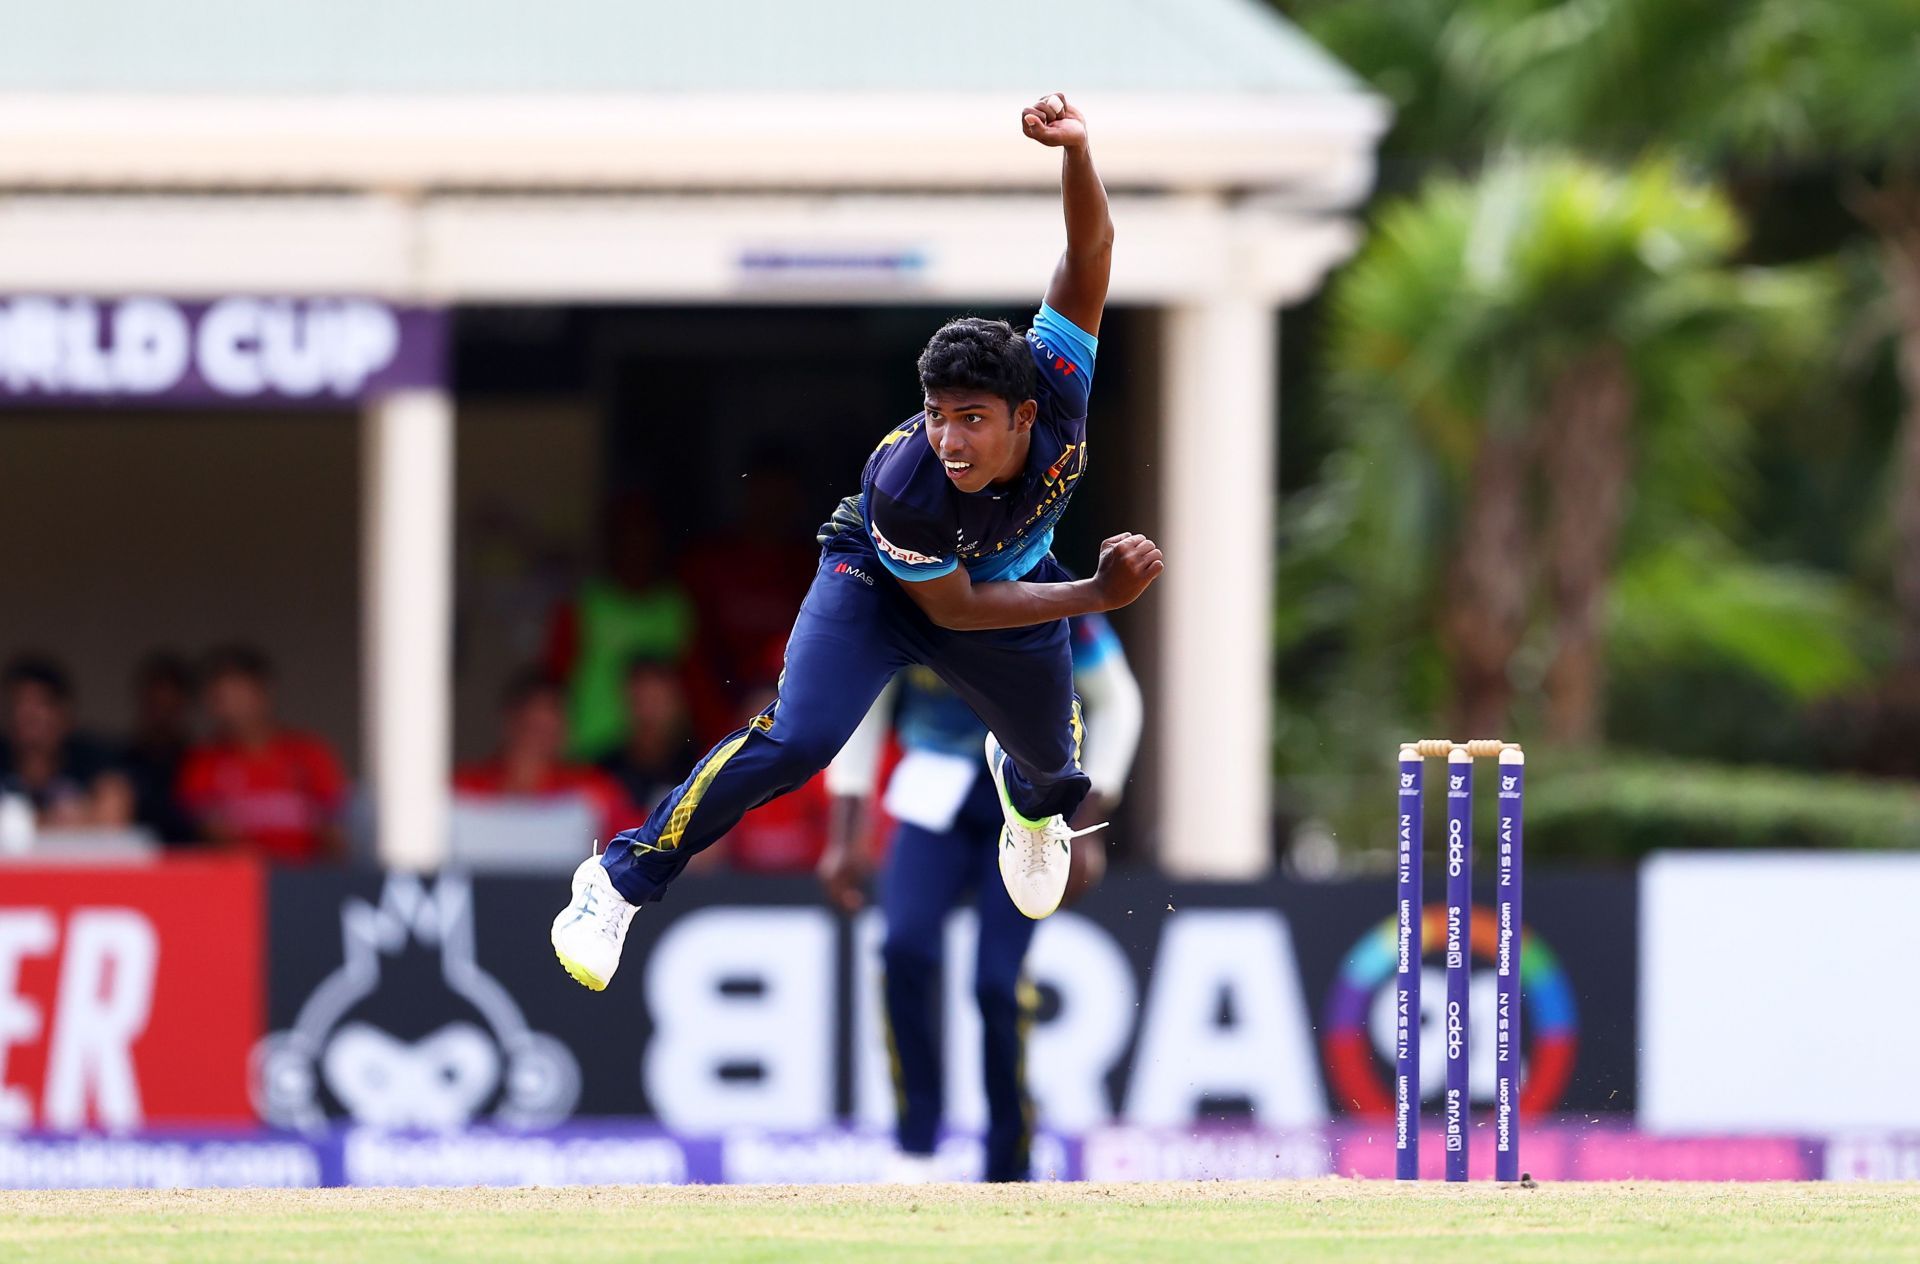 Vinuja Ranpul of Sri Lanka U19 (Courtesy: Cricket World Cup)